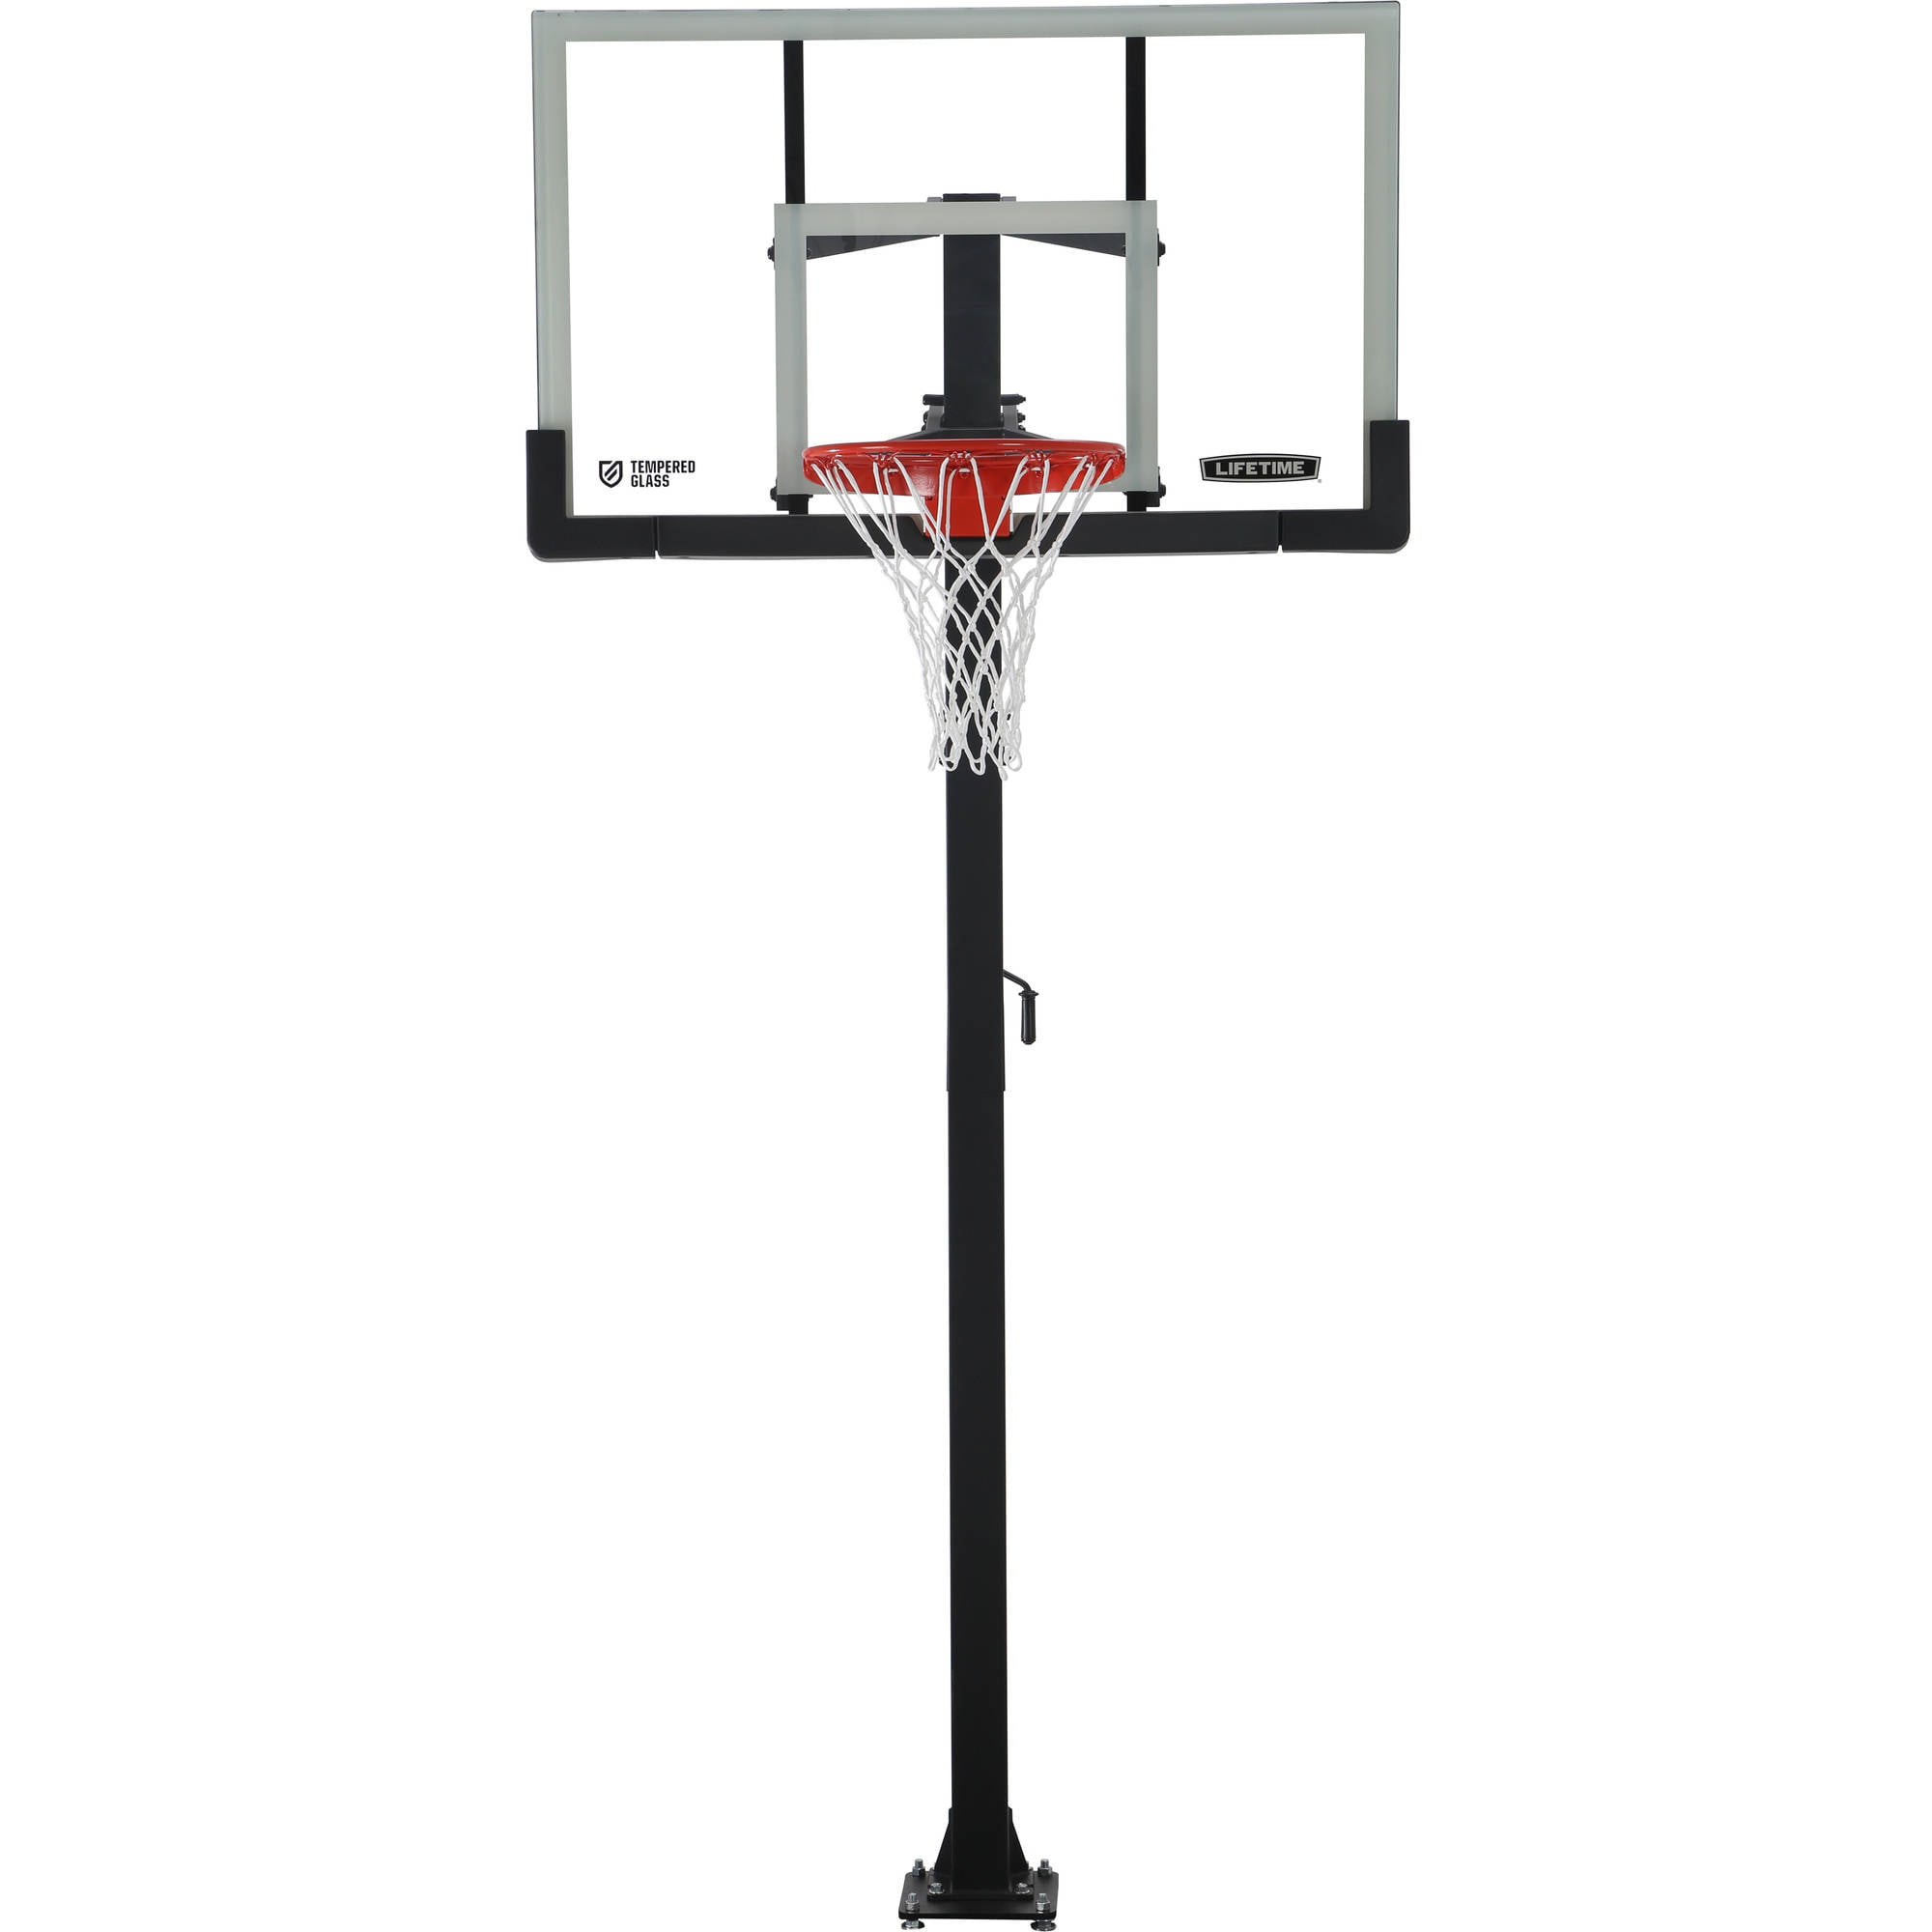 Lifetime 71799 Adjustable In-Ground Basketball System with Shatterproof Backboard for sale online 